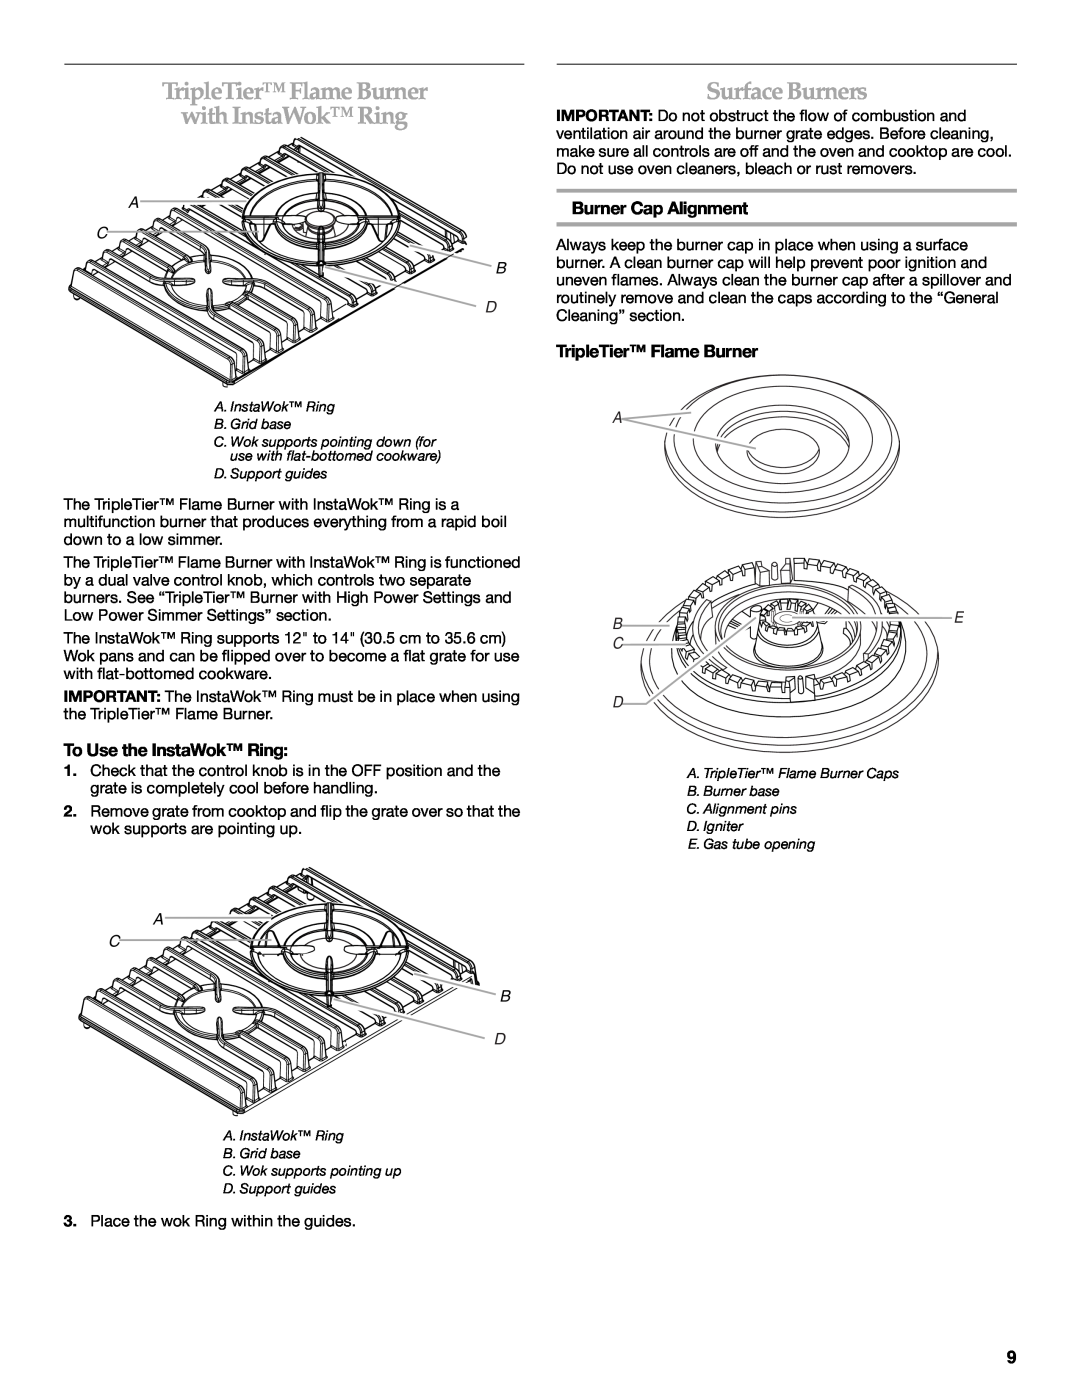 KitchenAid KGRI801 manual TripleTier Flame Burner with InstaWok Ring, Surface Burners, Burner Cap Alignment, A C B D 